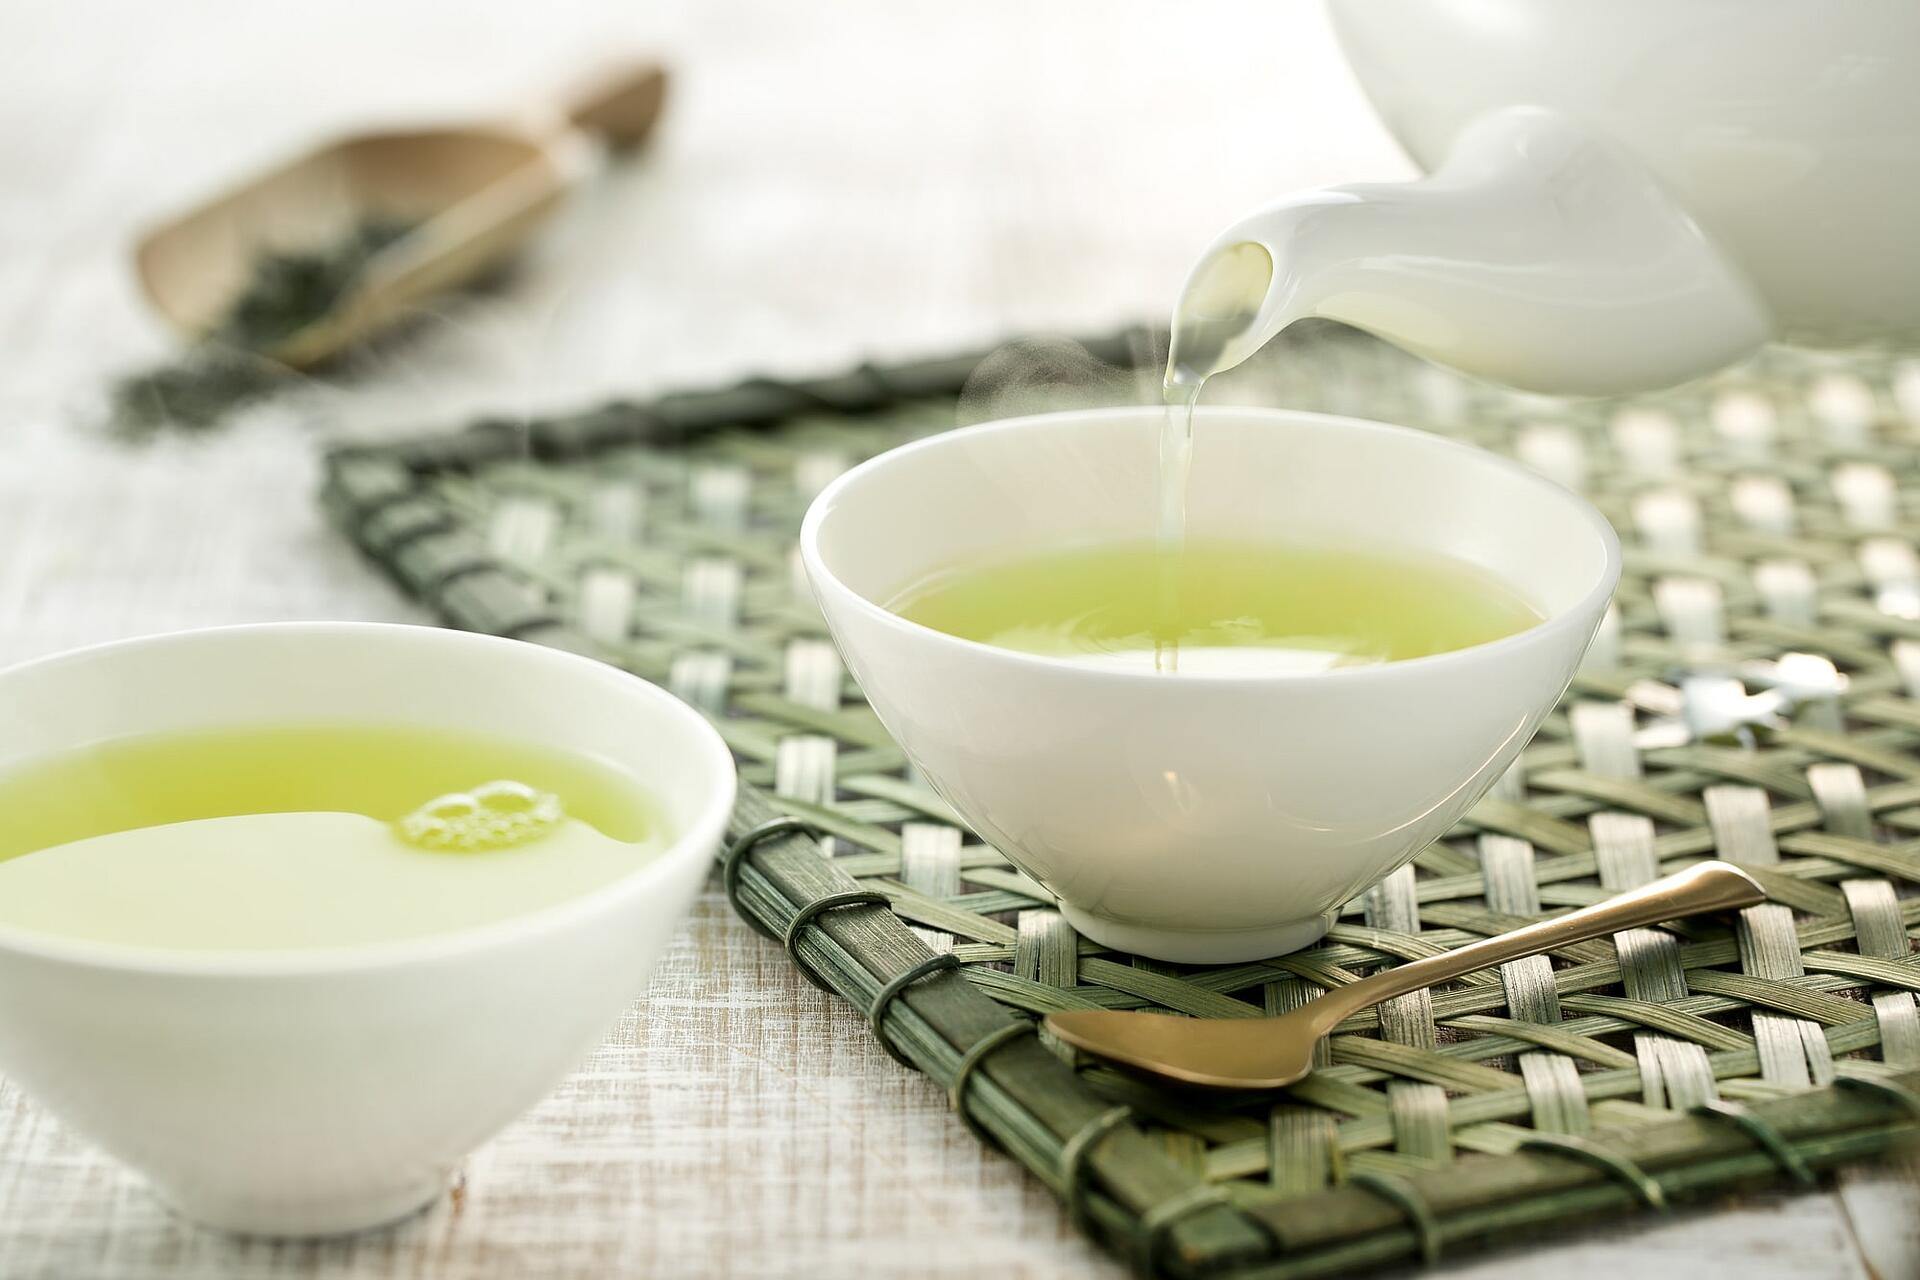 Japan Matcha Hotaru - Beginner's Favourite Organic Tea*, 30g